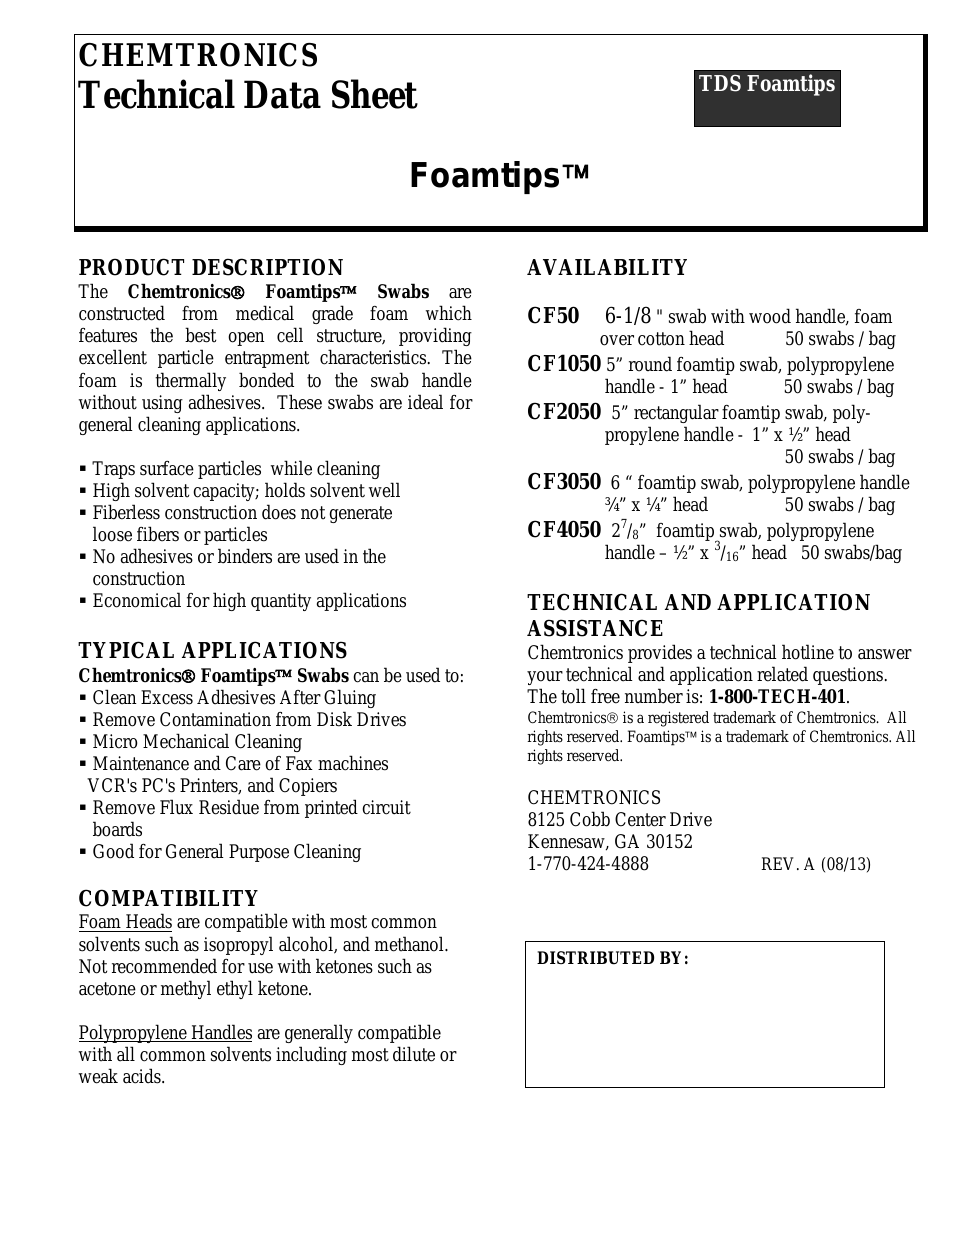 Foamtips CF4050